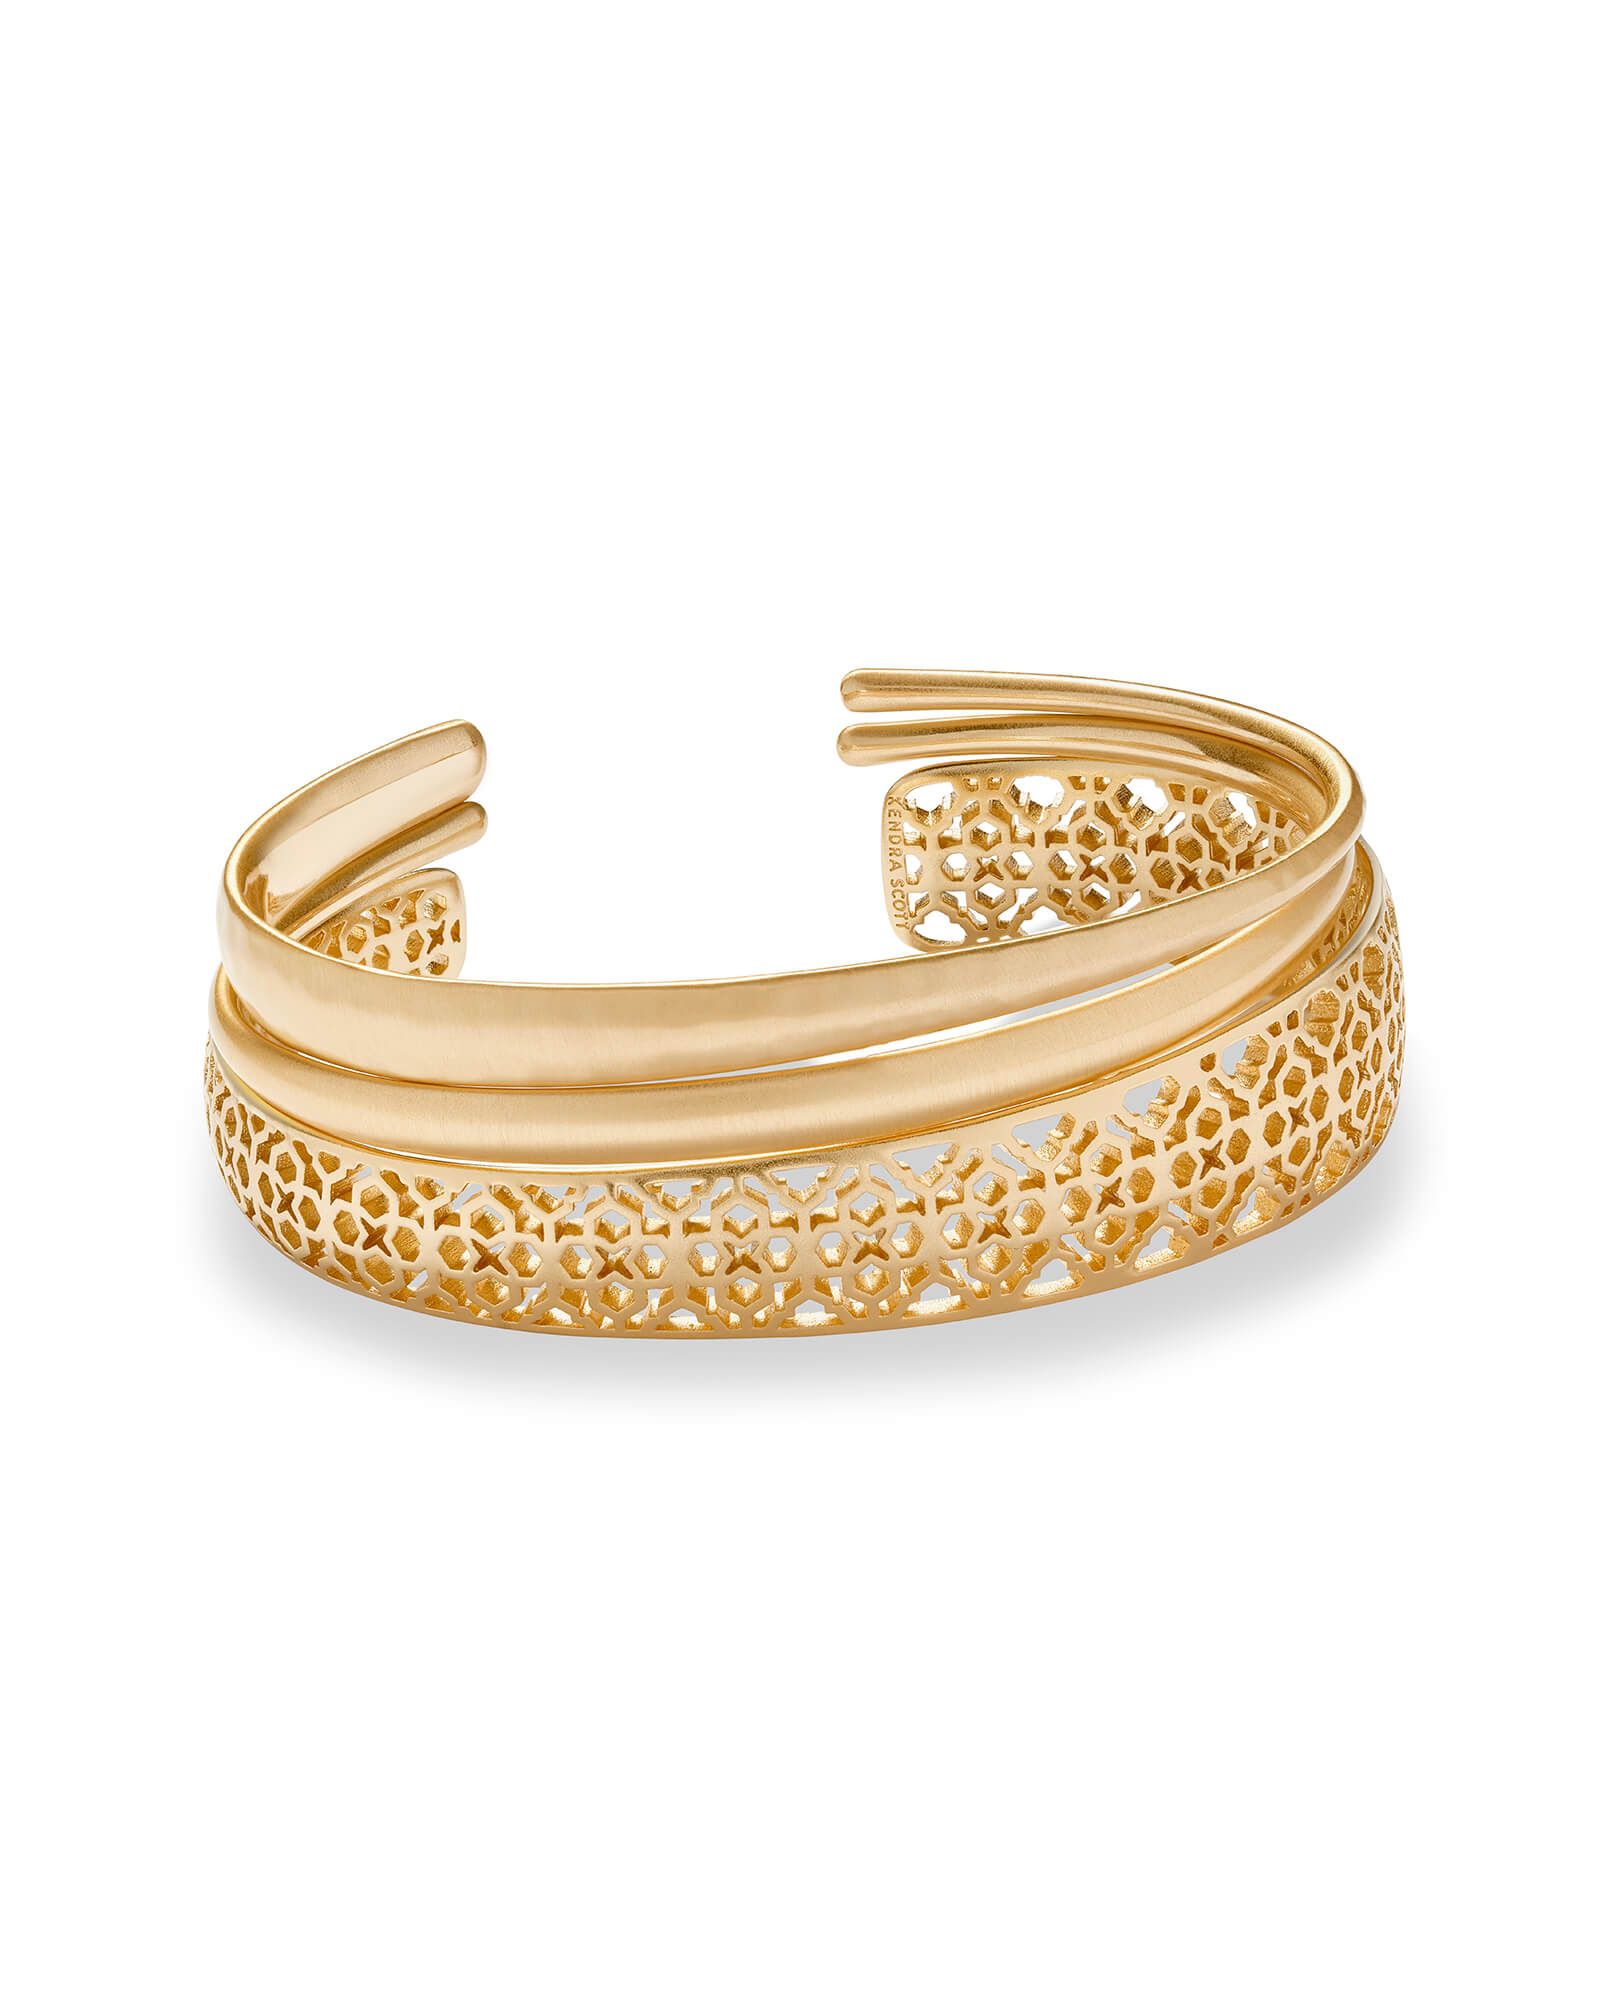 Tiana Gold Pinch Bracelet Set in Gold Filigree | Kendra Scott